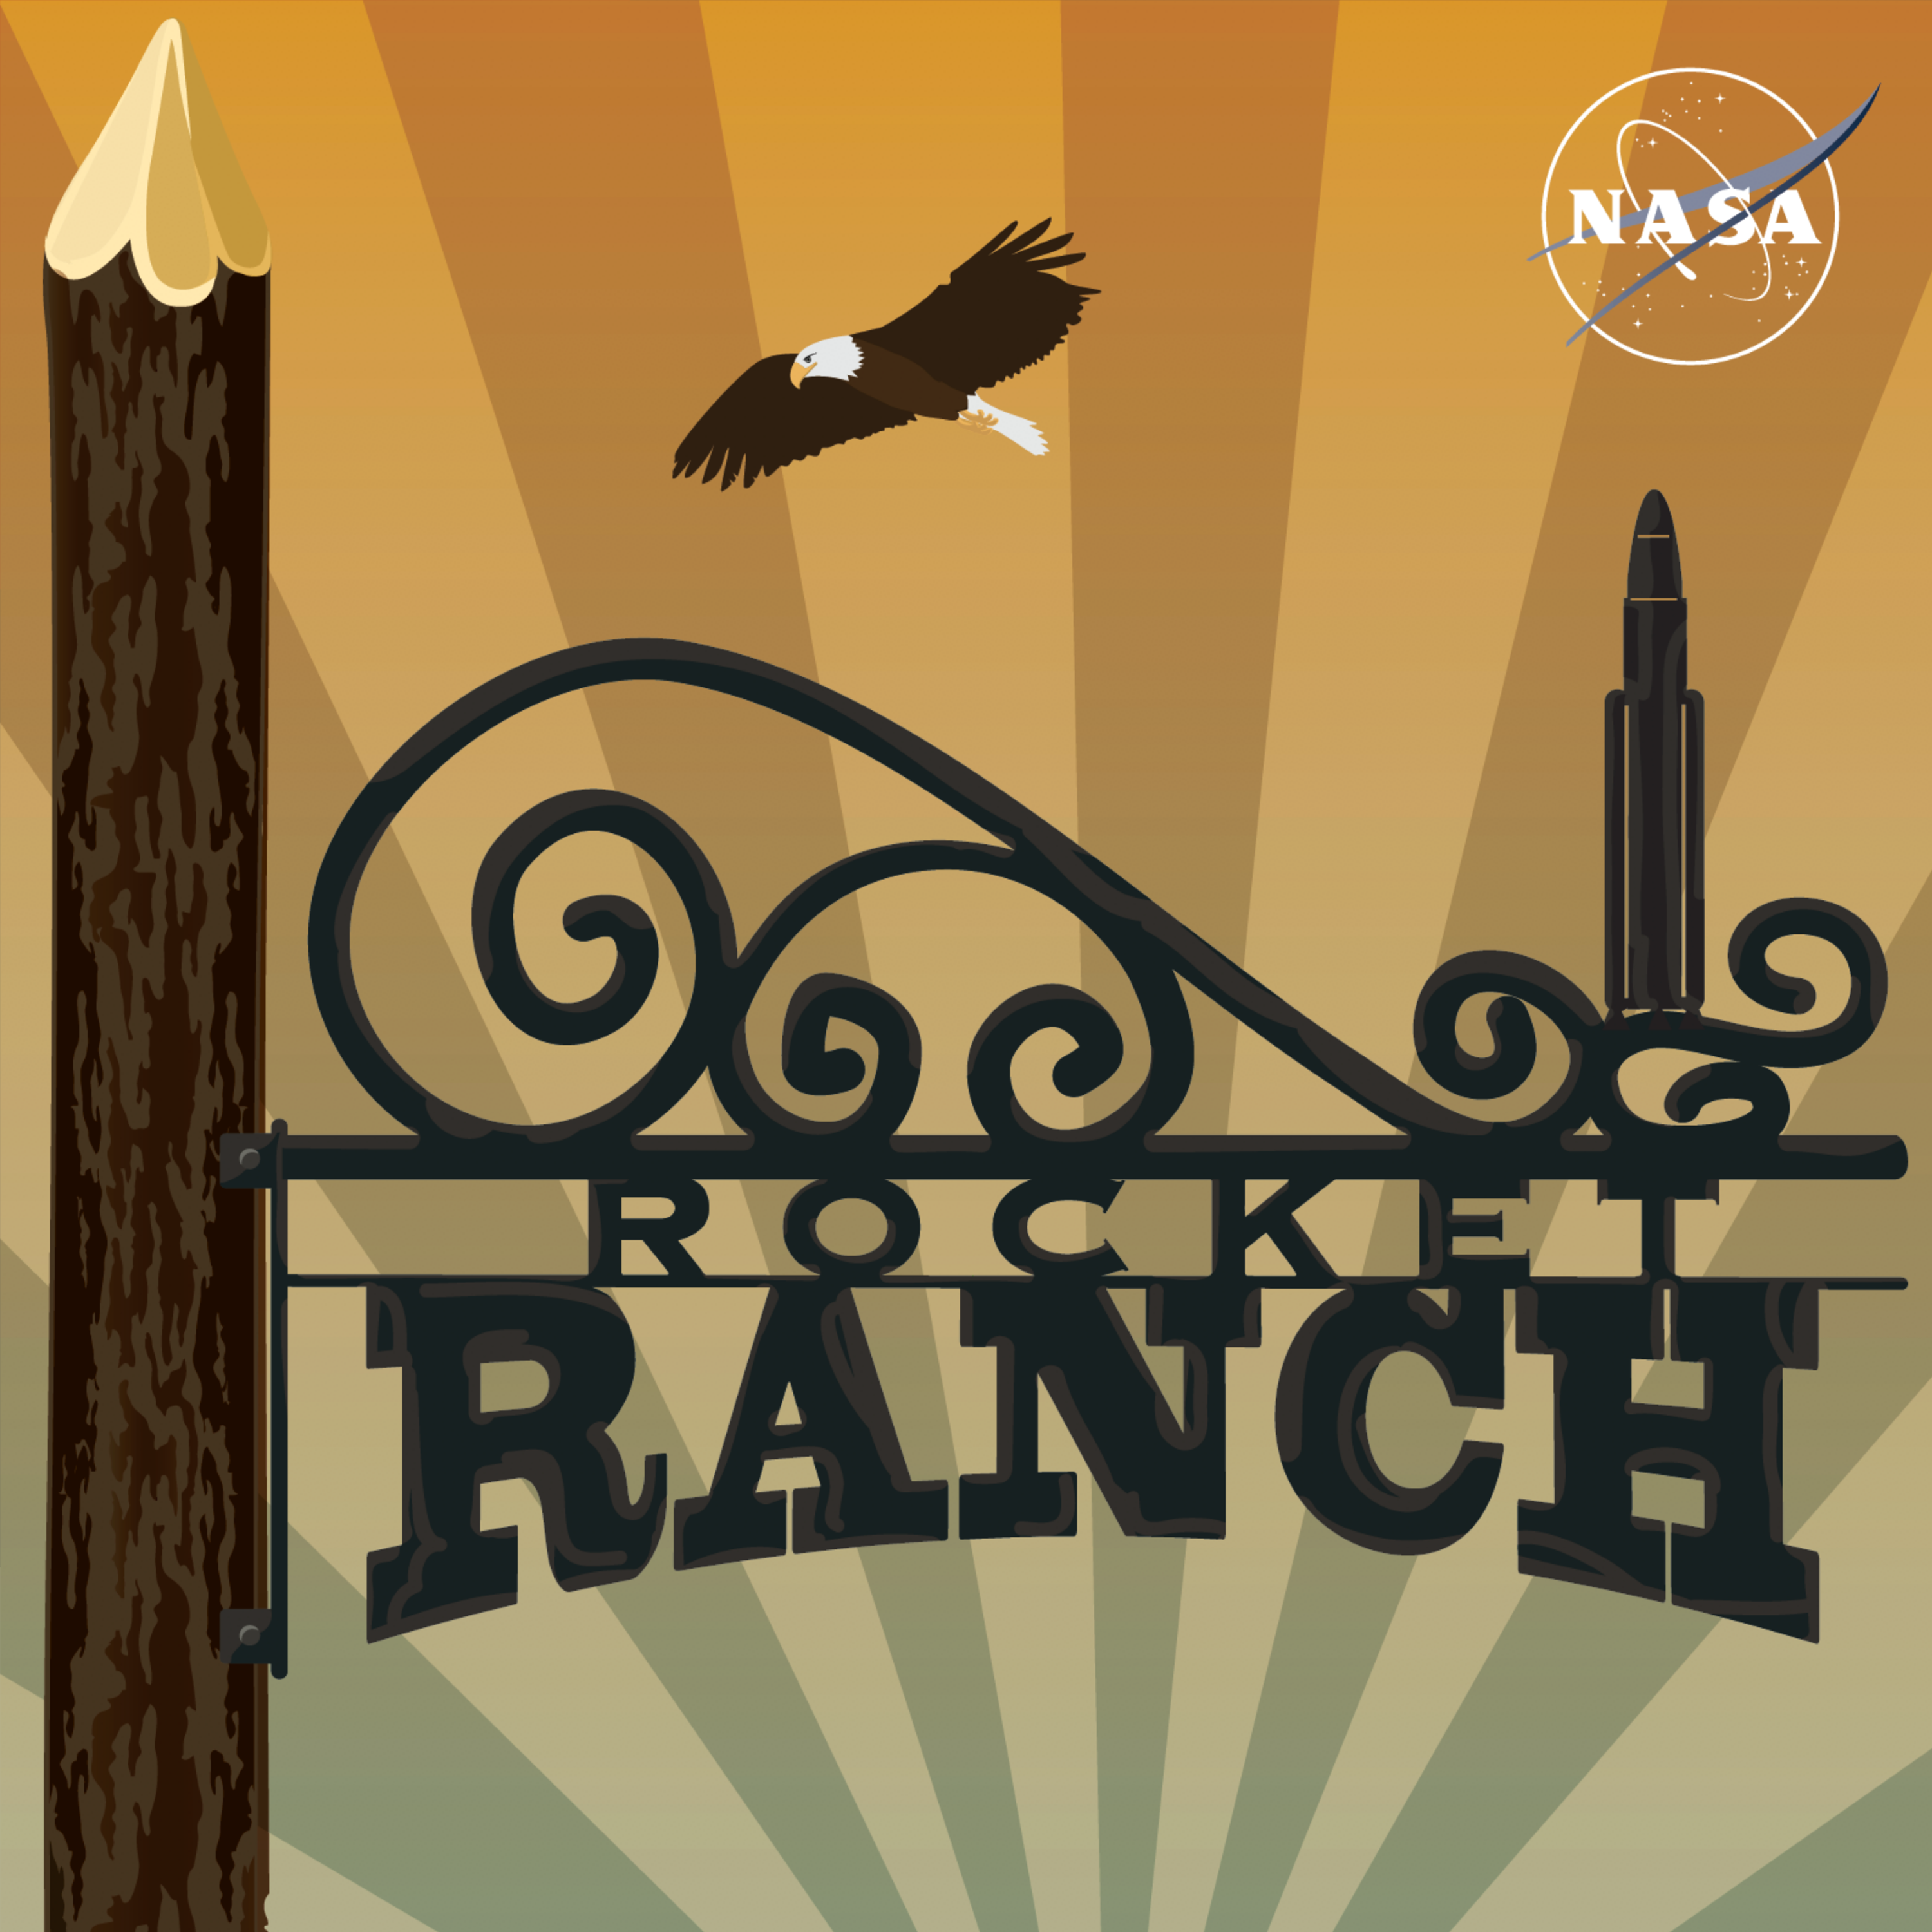 Rocket Ranch podcast cover illustration